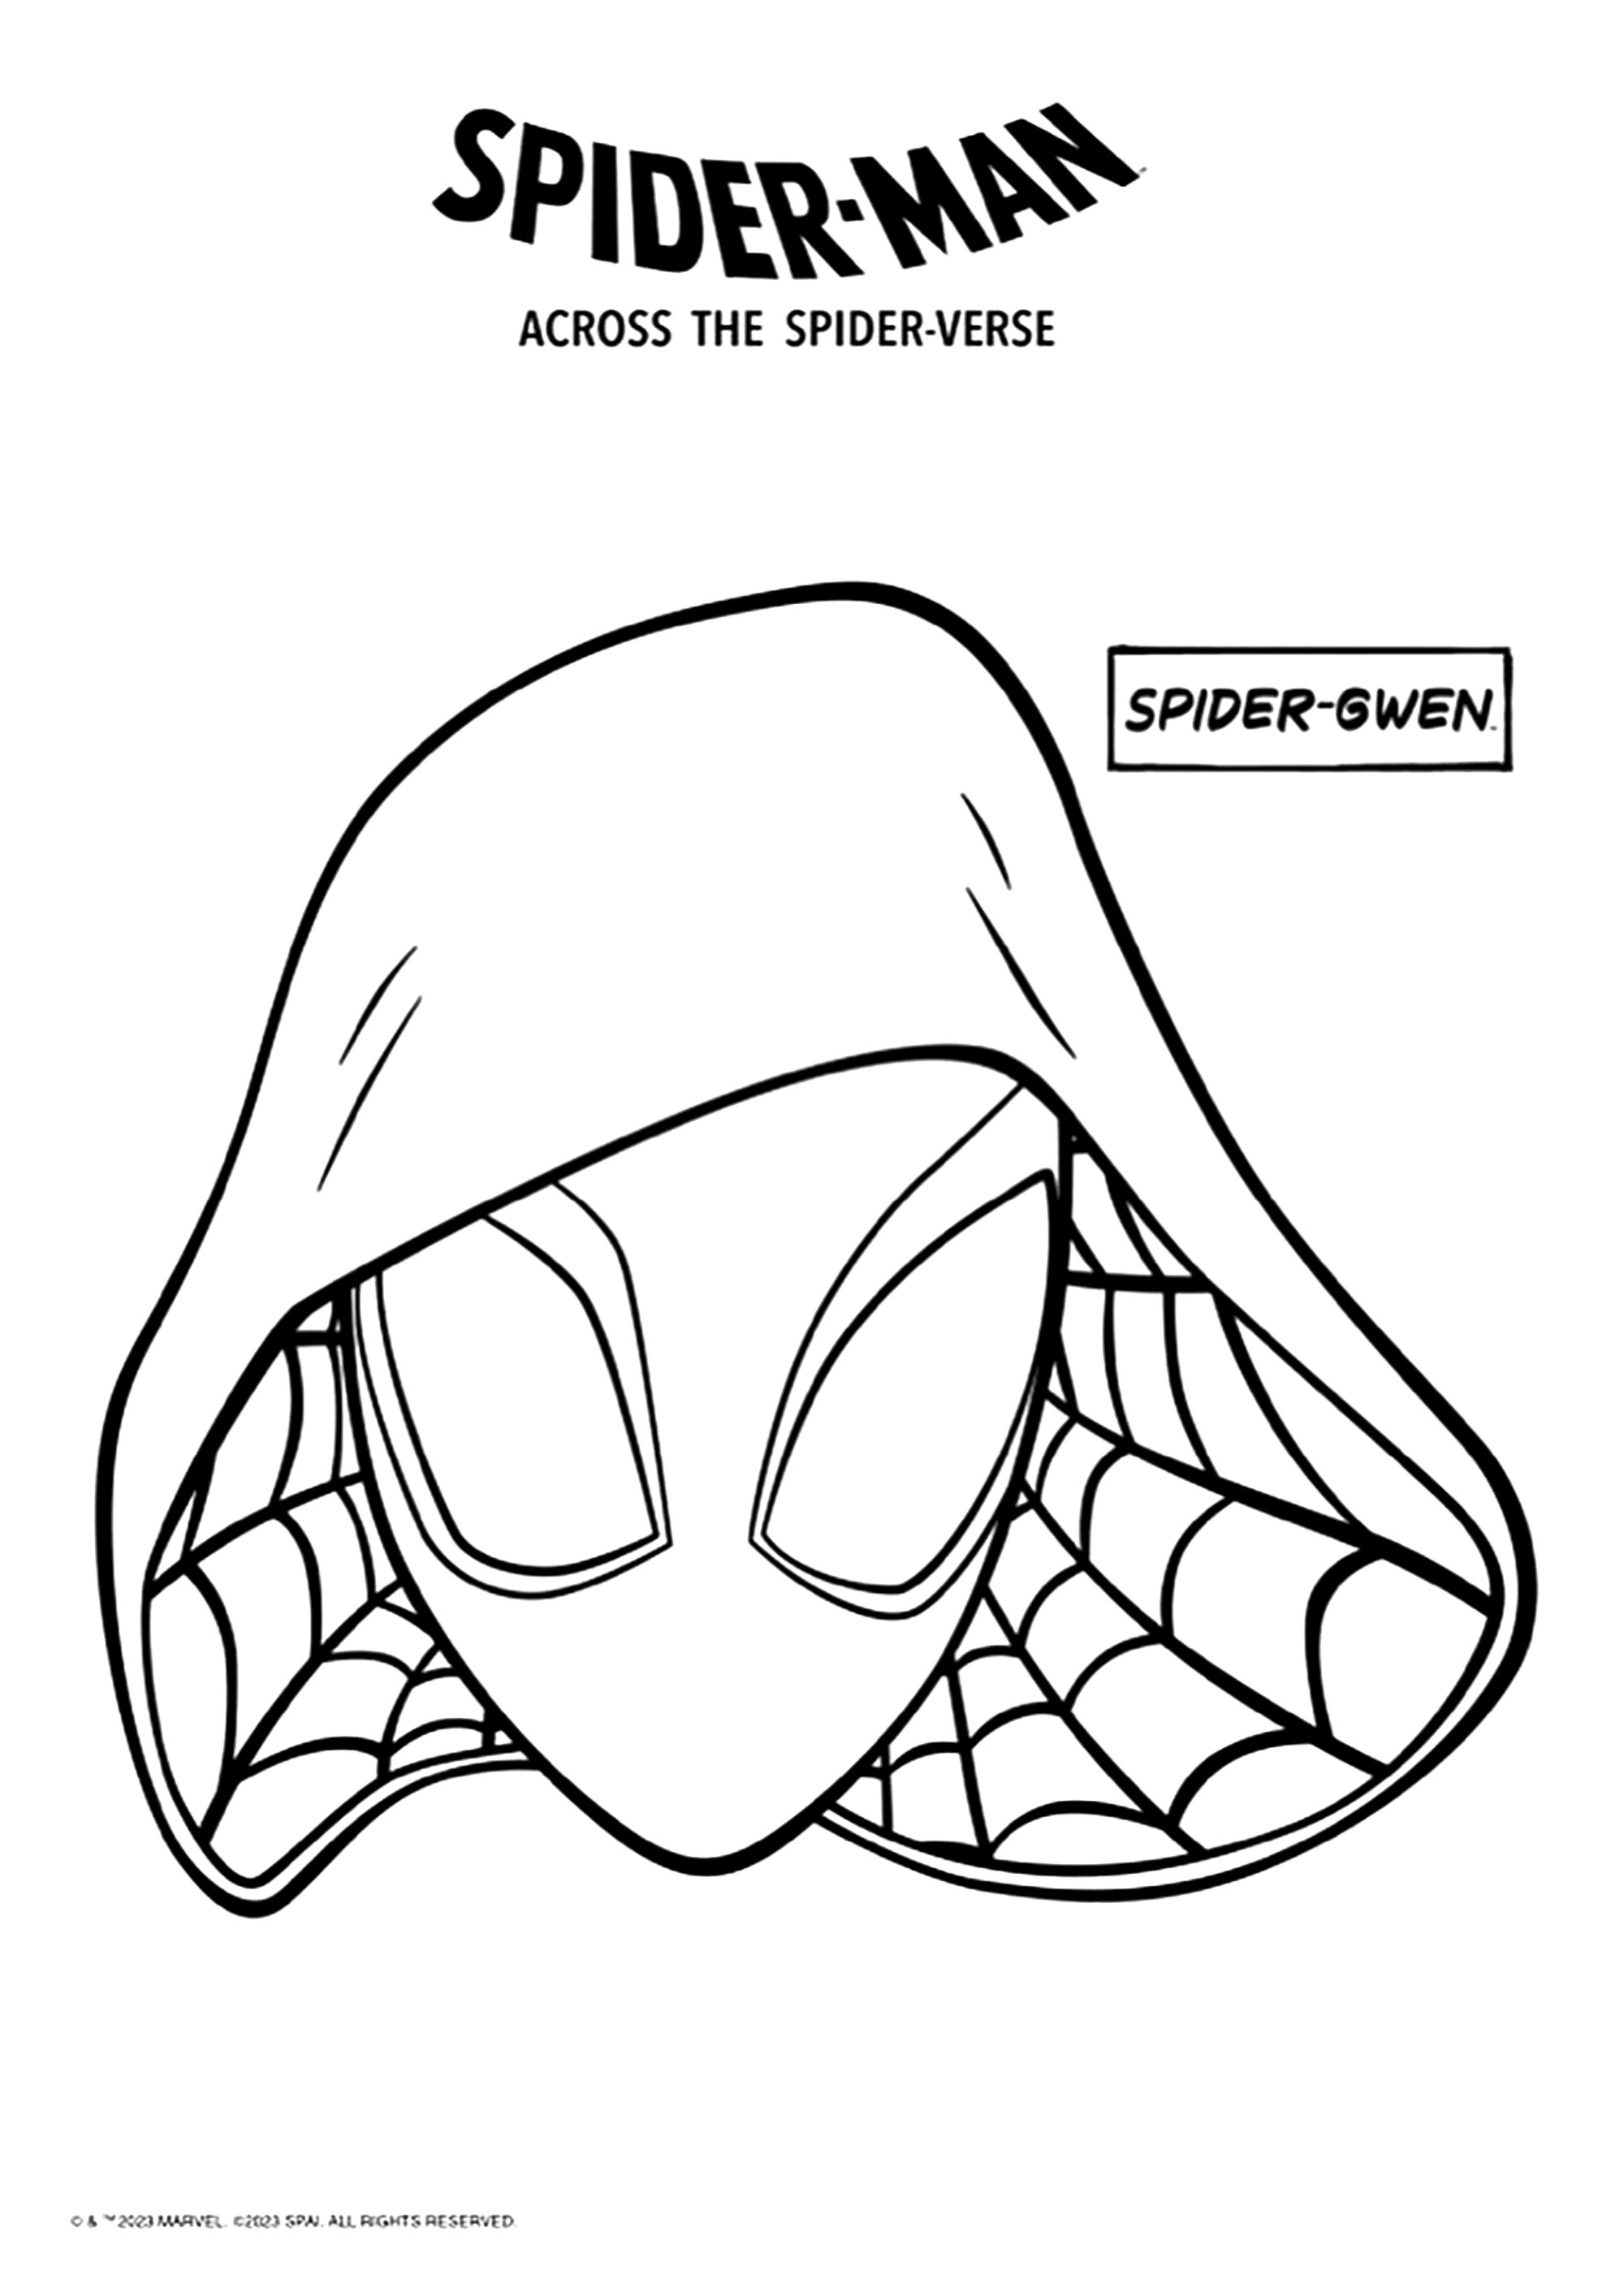 Spider-Gwen (Araña Fantasma)